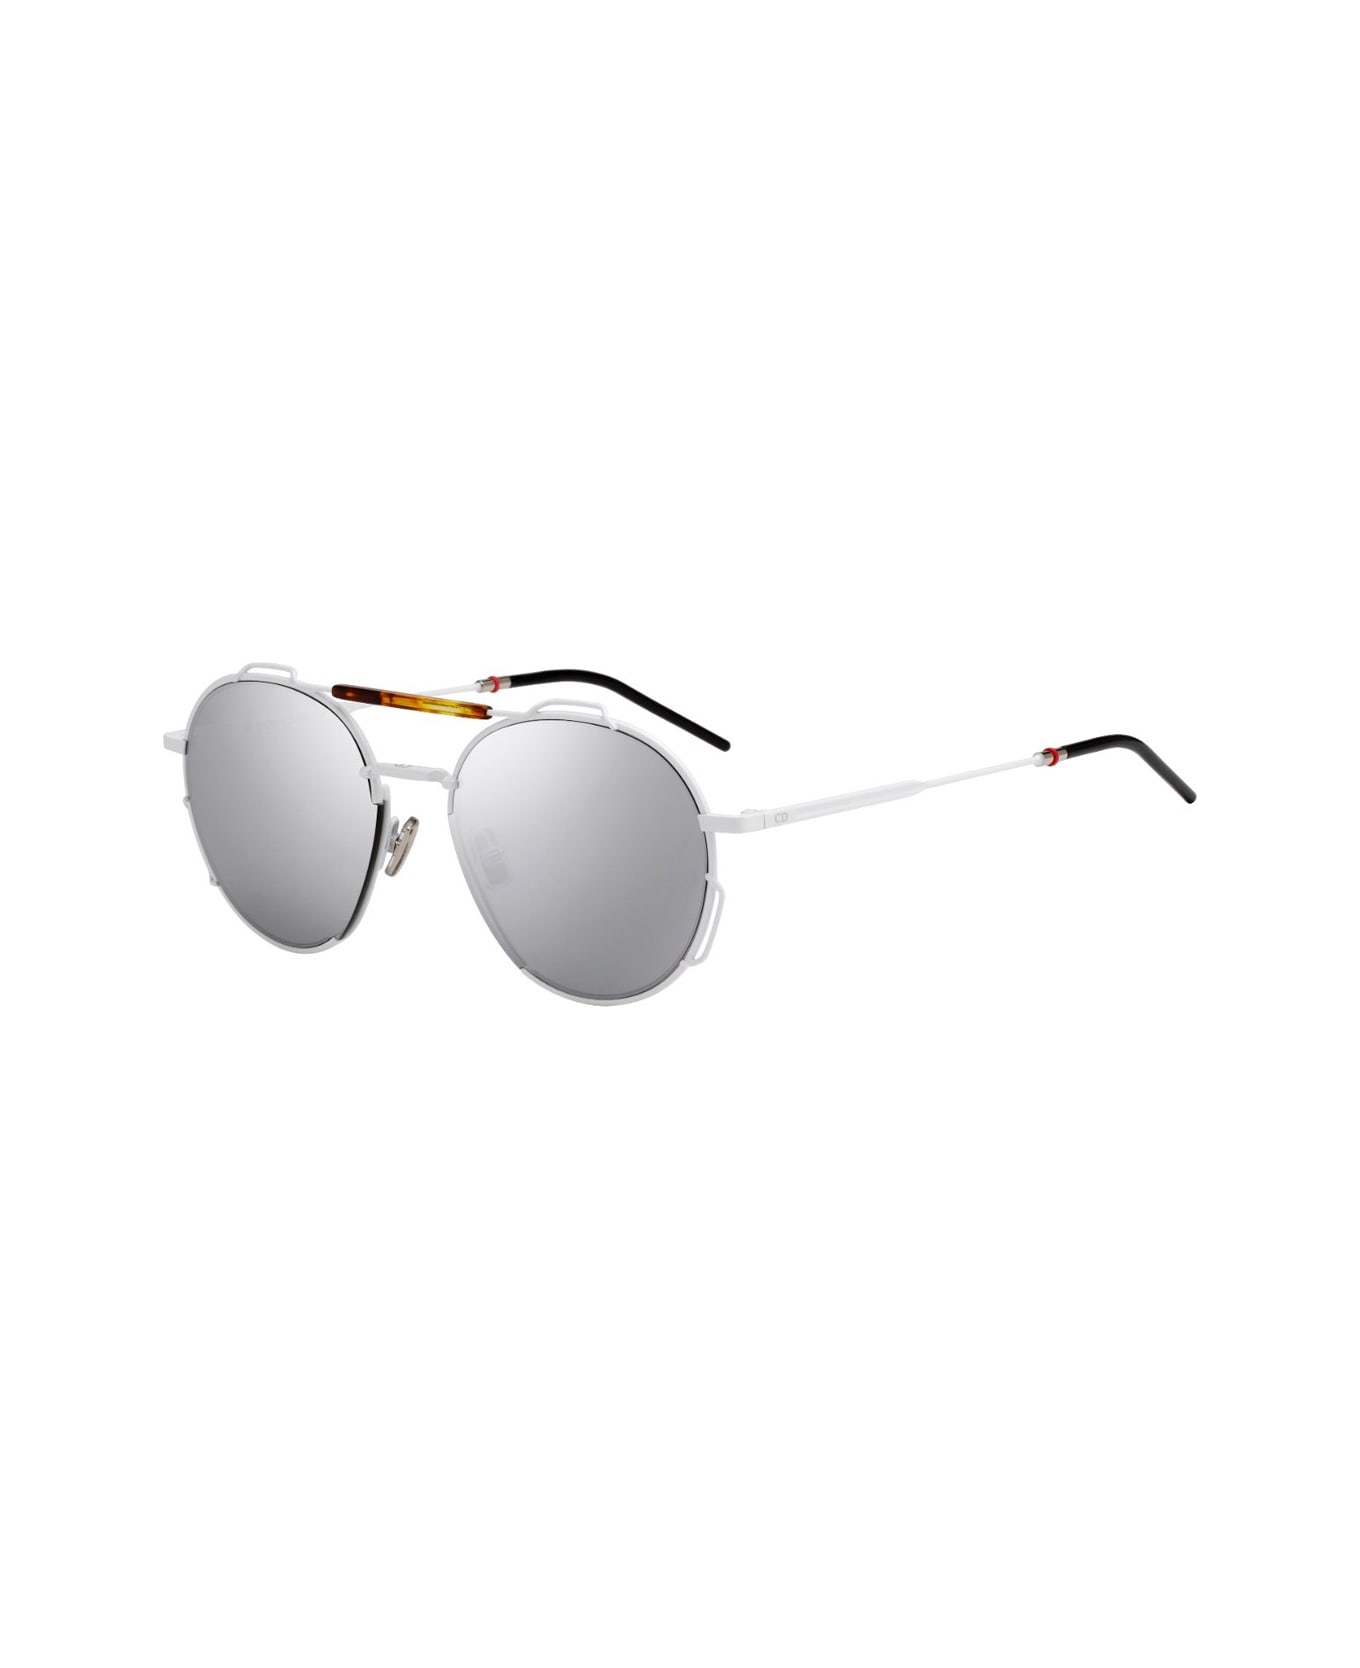 Dior Eyewear 0234 S Sunglasses - Argento